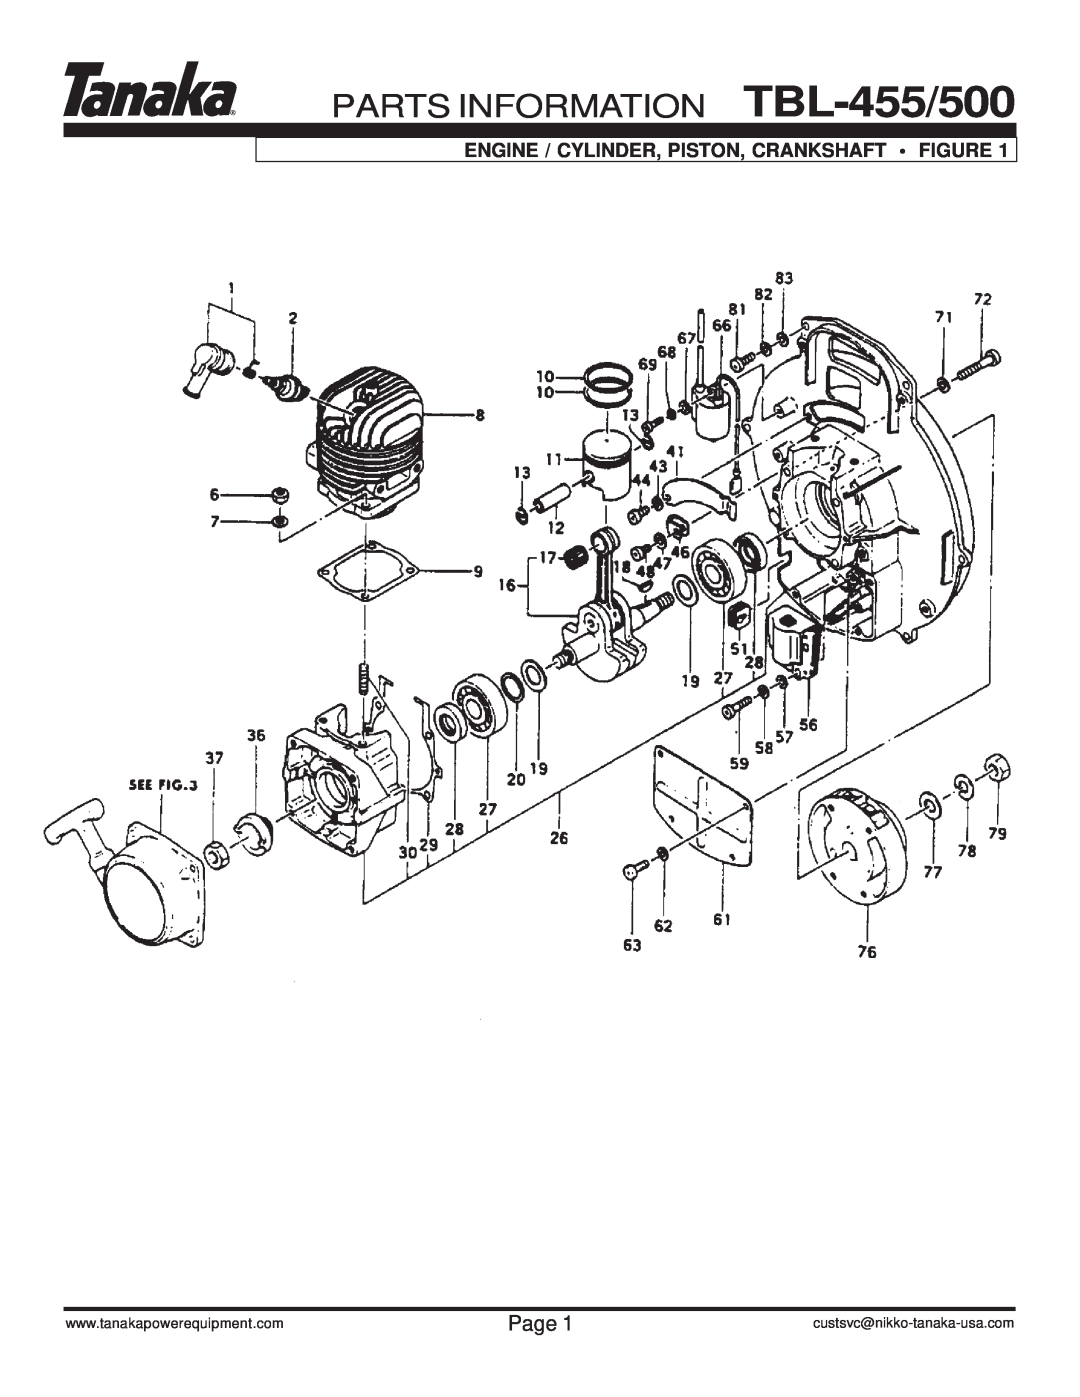 Tanaka manual PARTS INFORMATION TBL-455/500, Engine / Cylinder, Piston, Crankshaft Figure, Page 